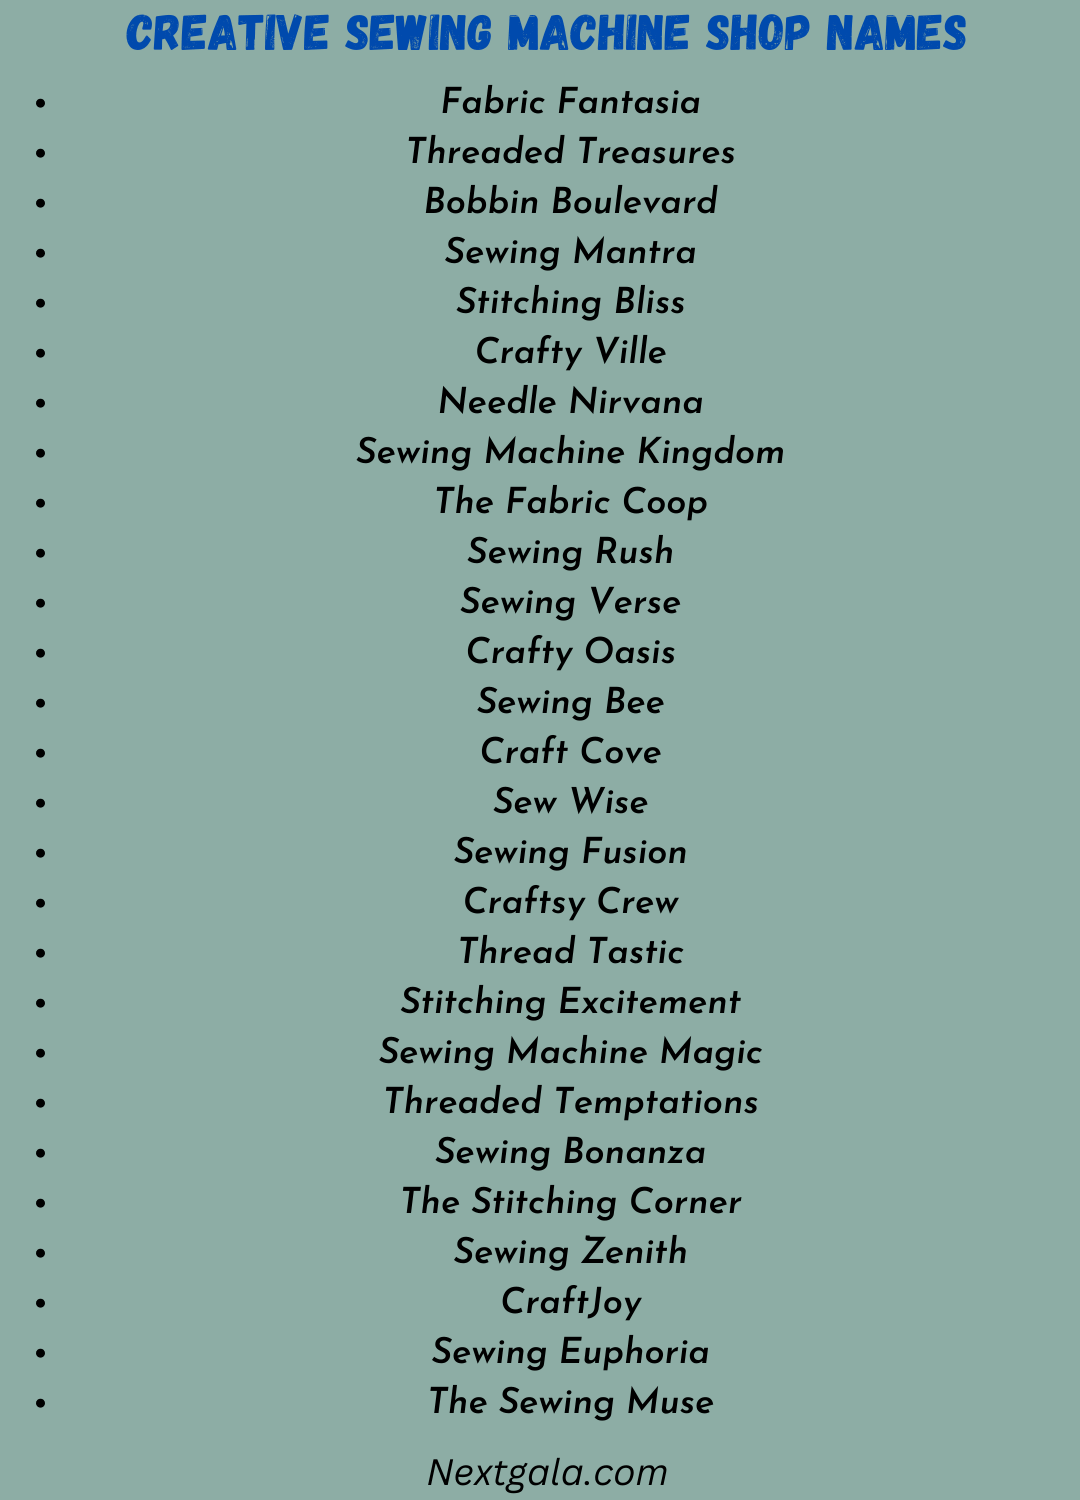 Creative Sewing Machine Shop Names